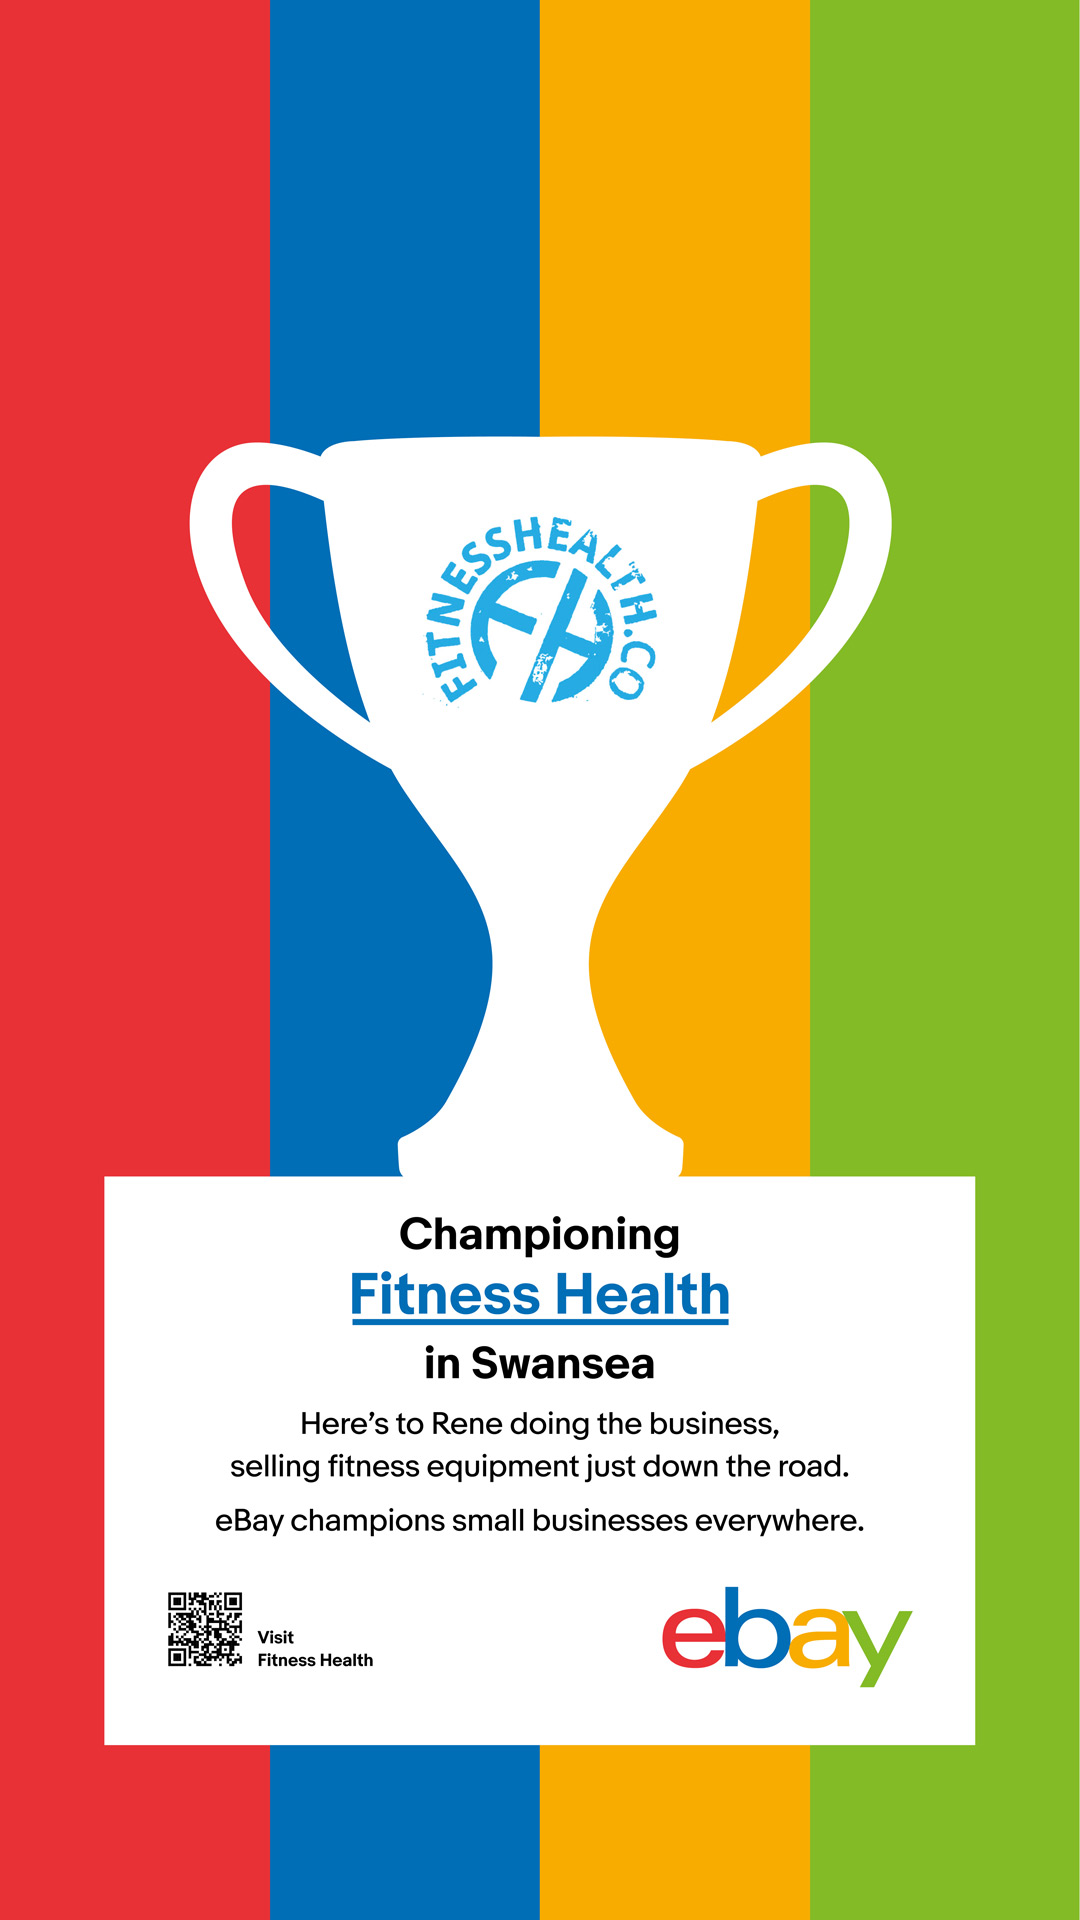 eBay Championing Fitness Health in Swansea